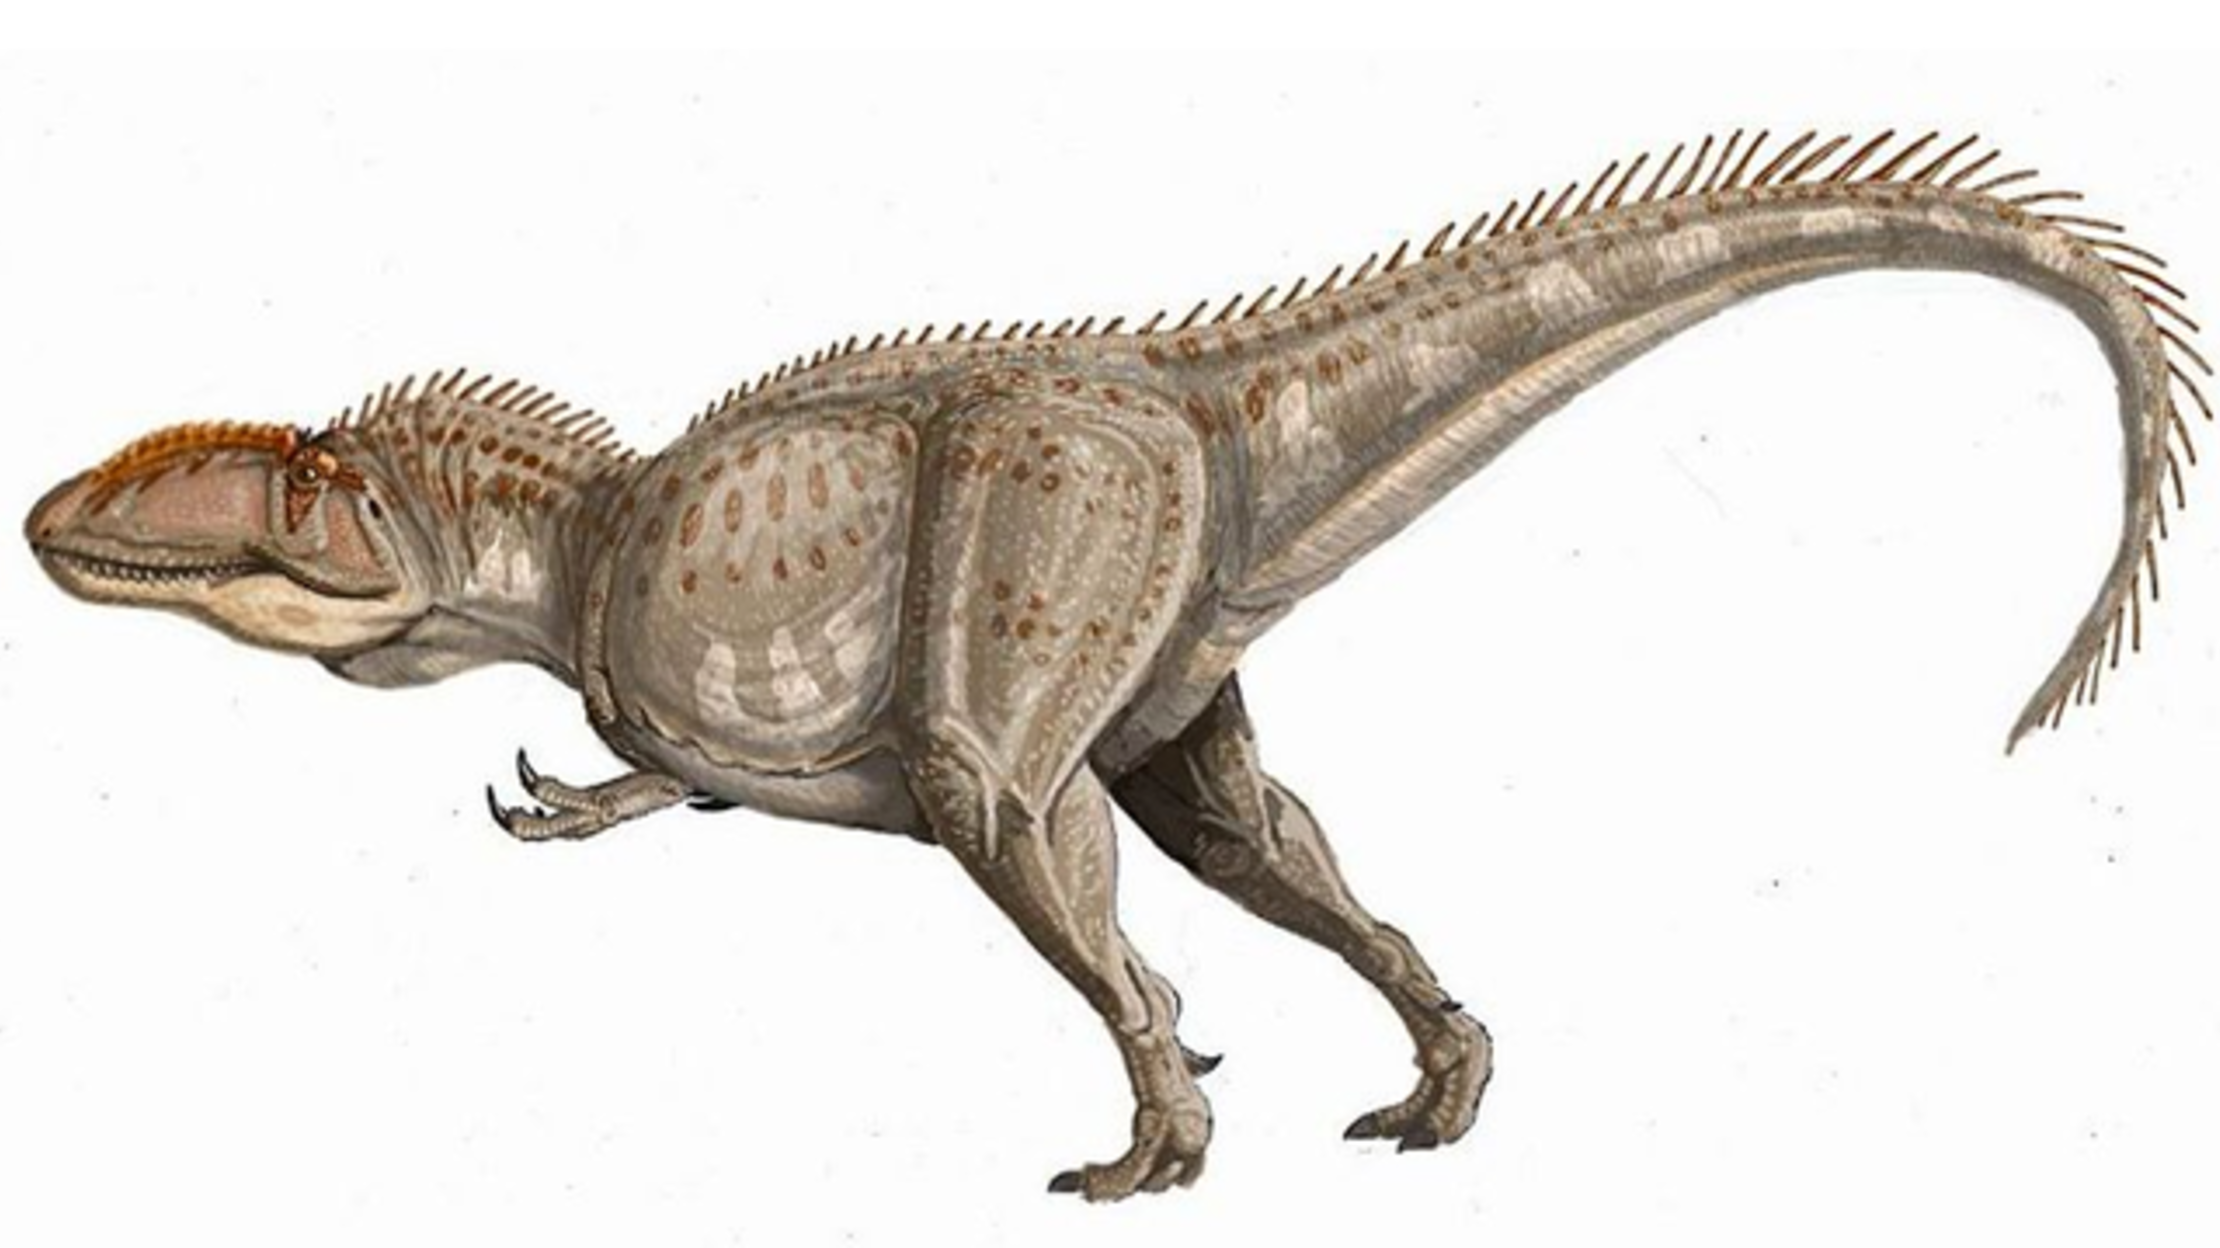 Giganotosaurus carolinii